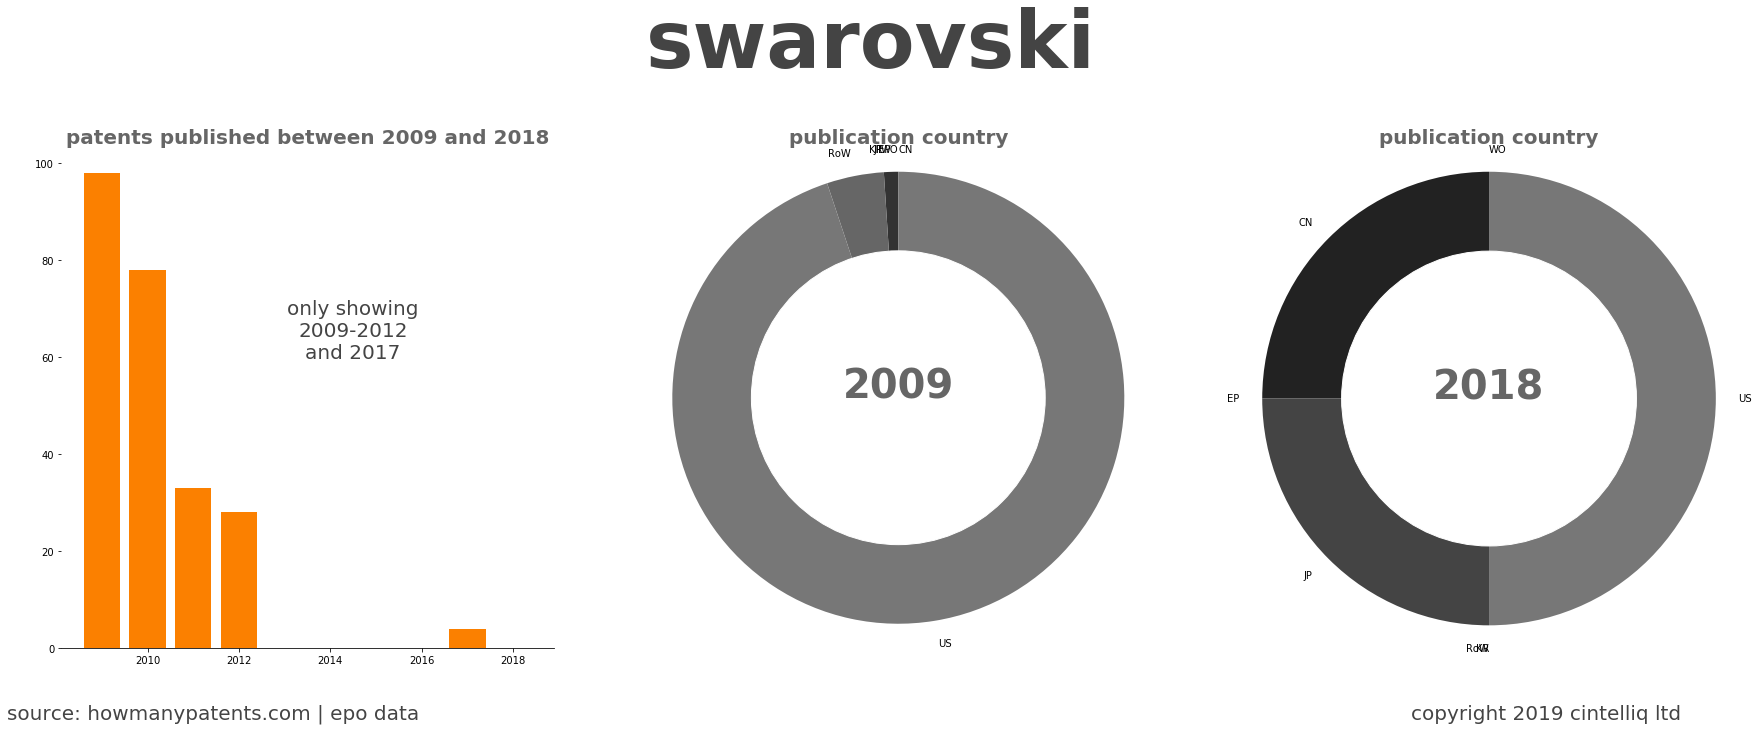 summary of patents for Swarovski